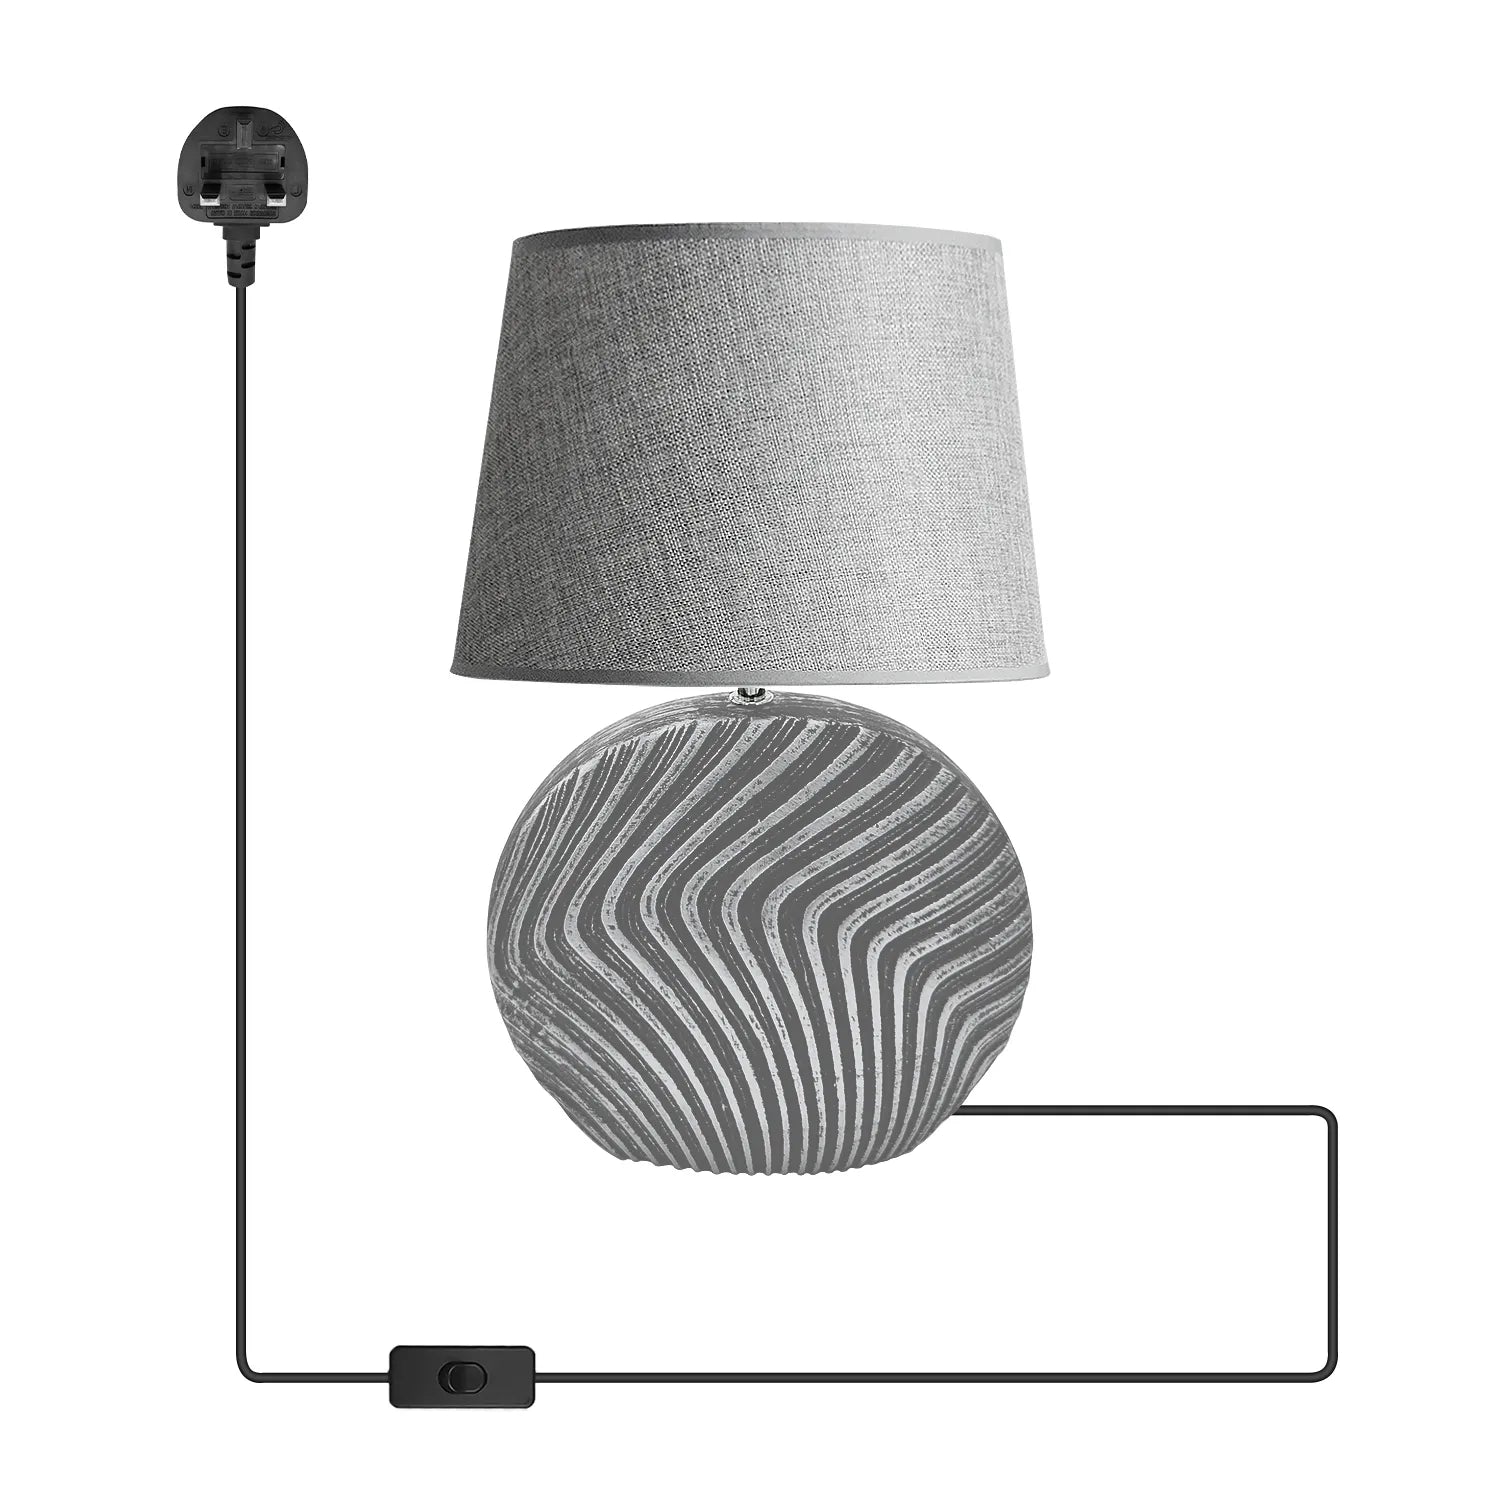 Modern Lamshade table Lamp Plug In Light Ceramic Base lamp